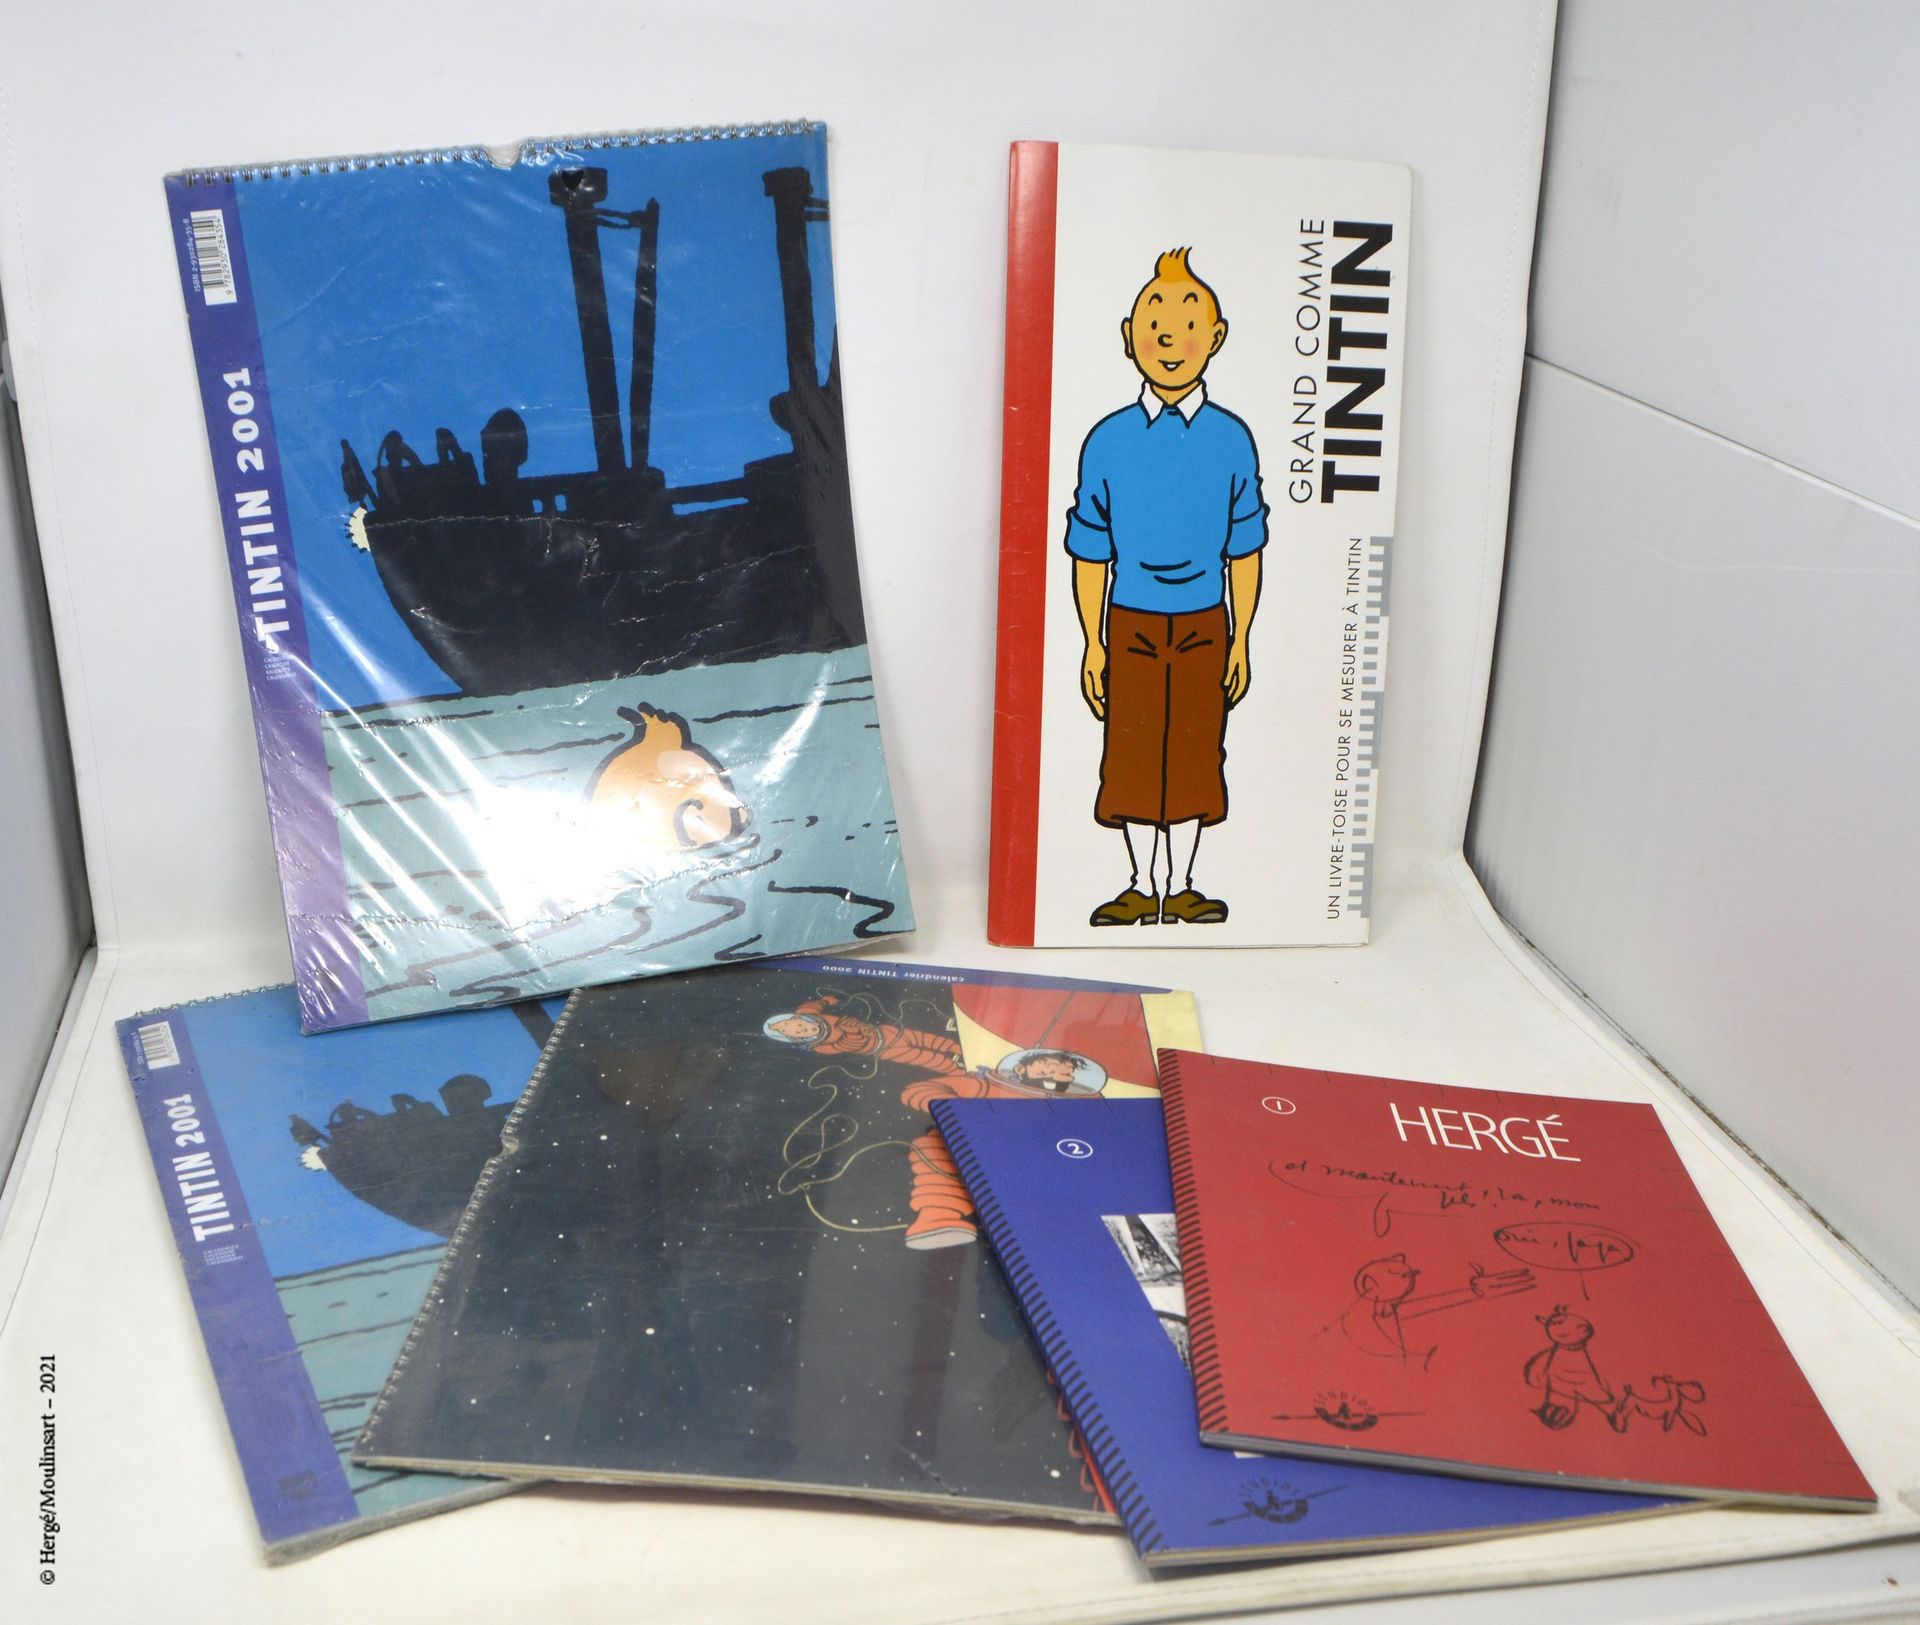 Dérivés HERGÉ/TINTIN/DVD/CALENDRIERS

Lot Tintin comprenant: 

- Hergé magazine &hellip;